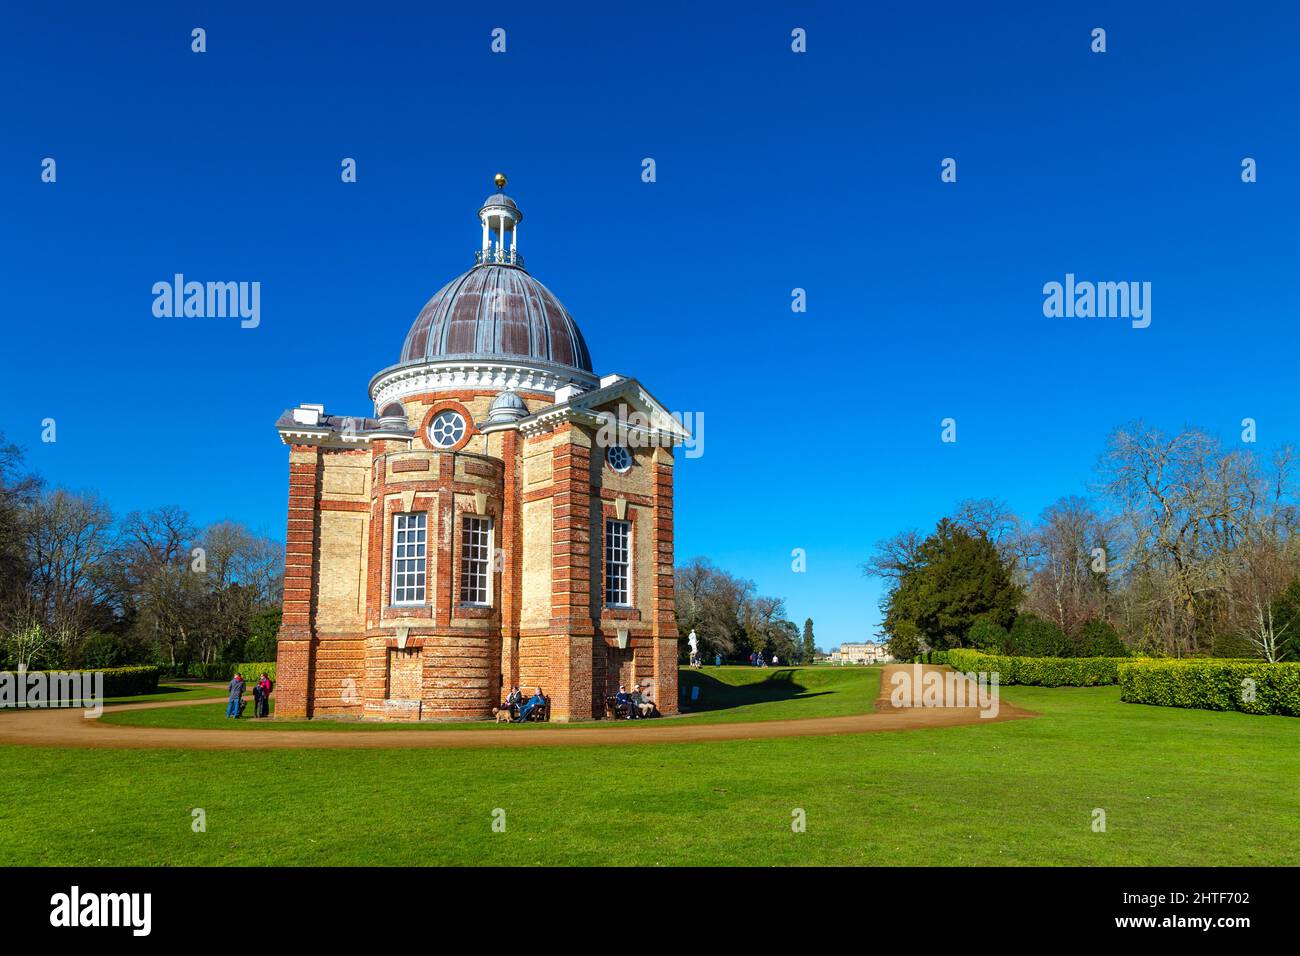 Exterior of Thomas Archer's 18th century baroque Archer Pavilion at Wrest Park gardens, Bedfordshire, UK Stock Photo